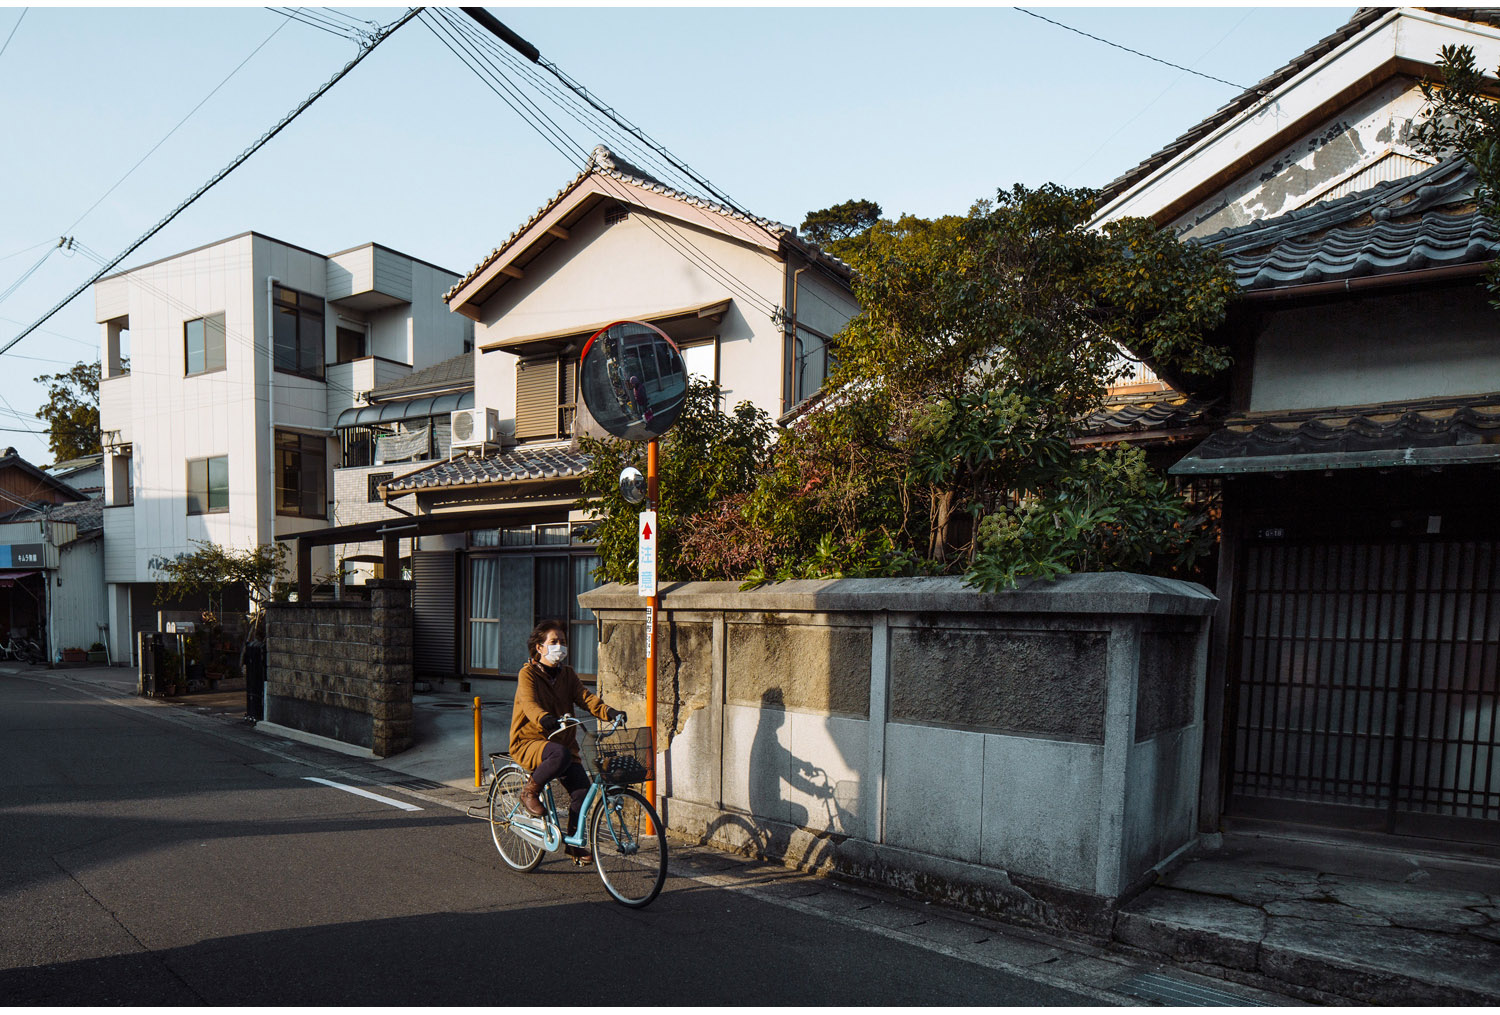 018-Japan-Architecture.jpg